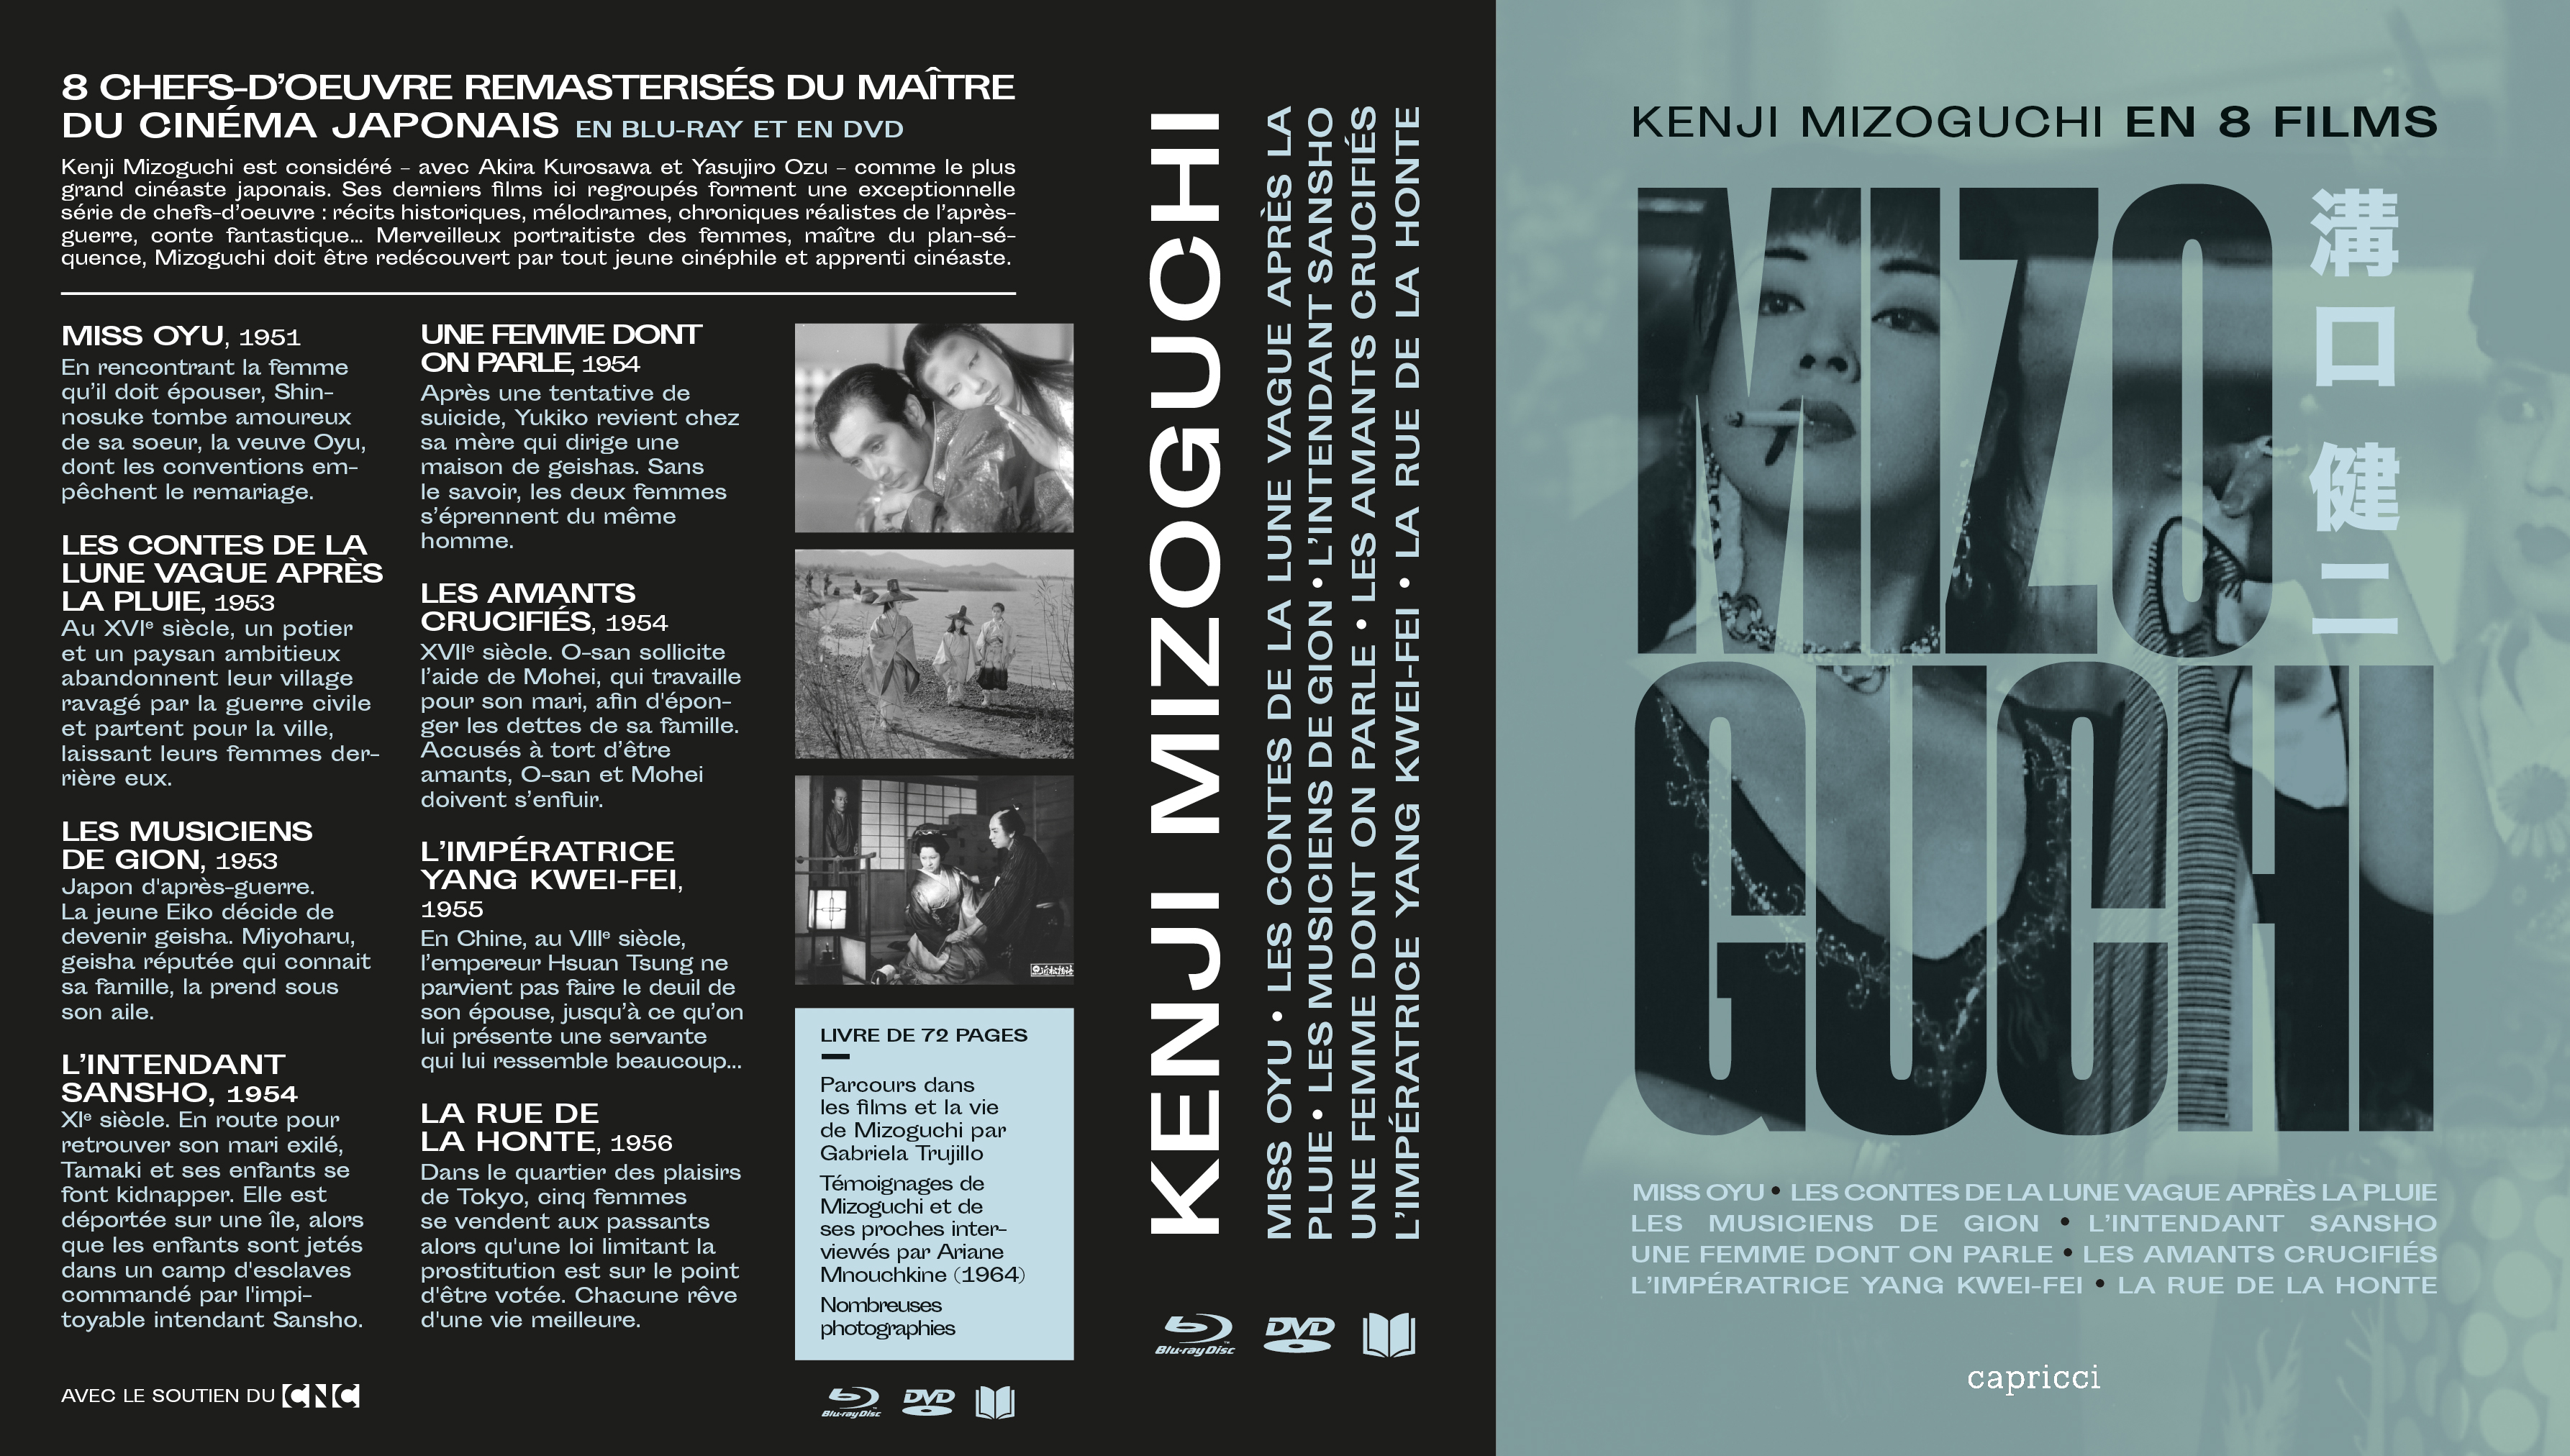 Jaquette DVD 8 films Kenji Mizoguchi